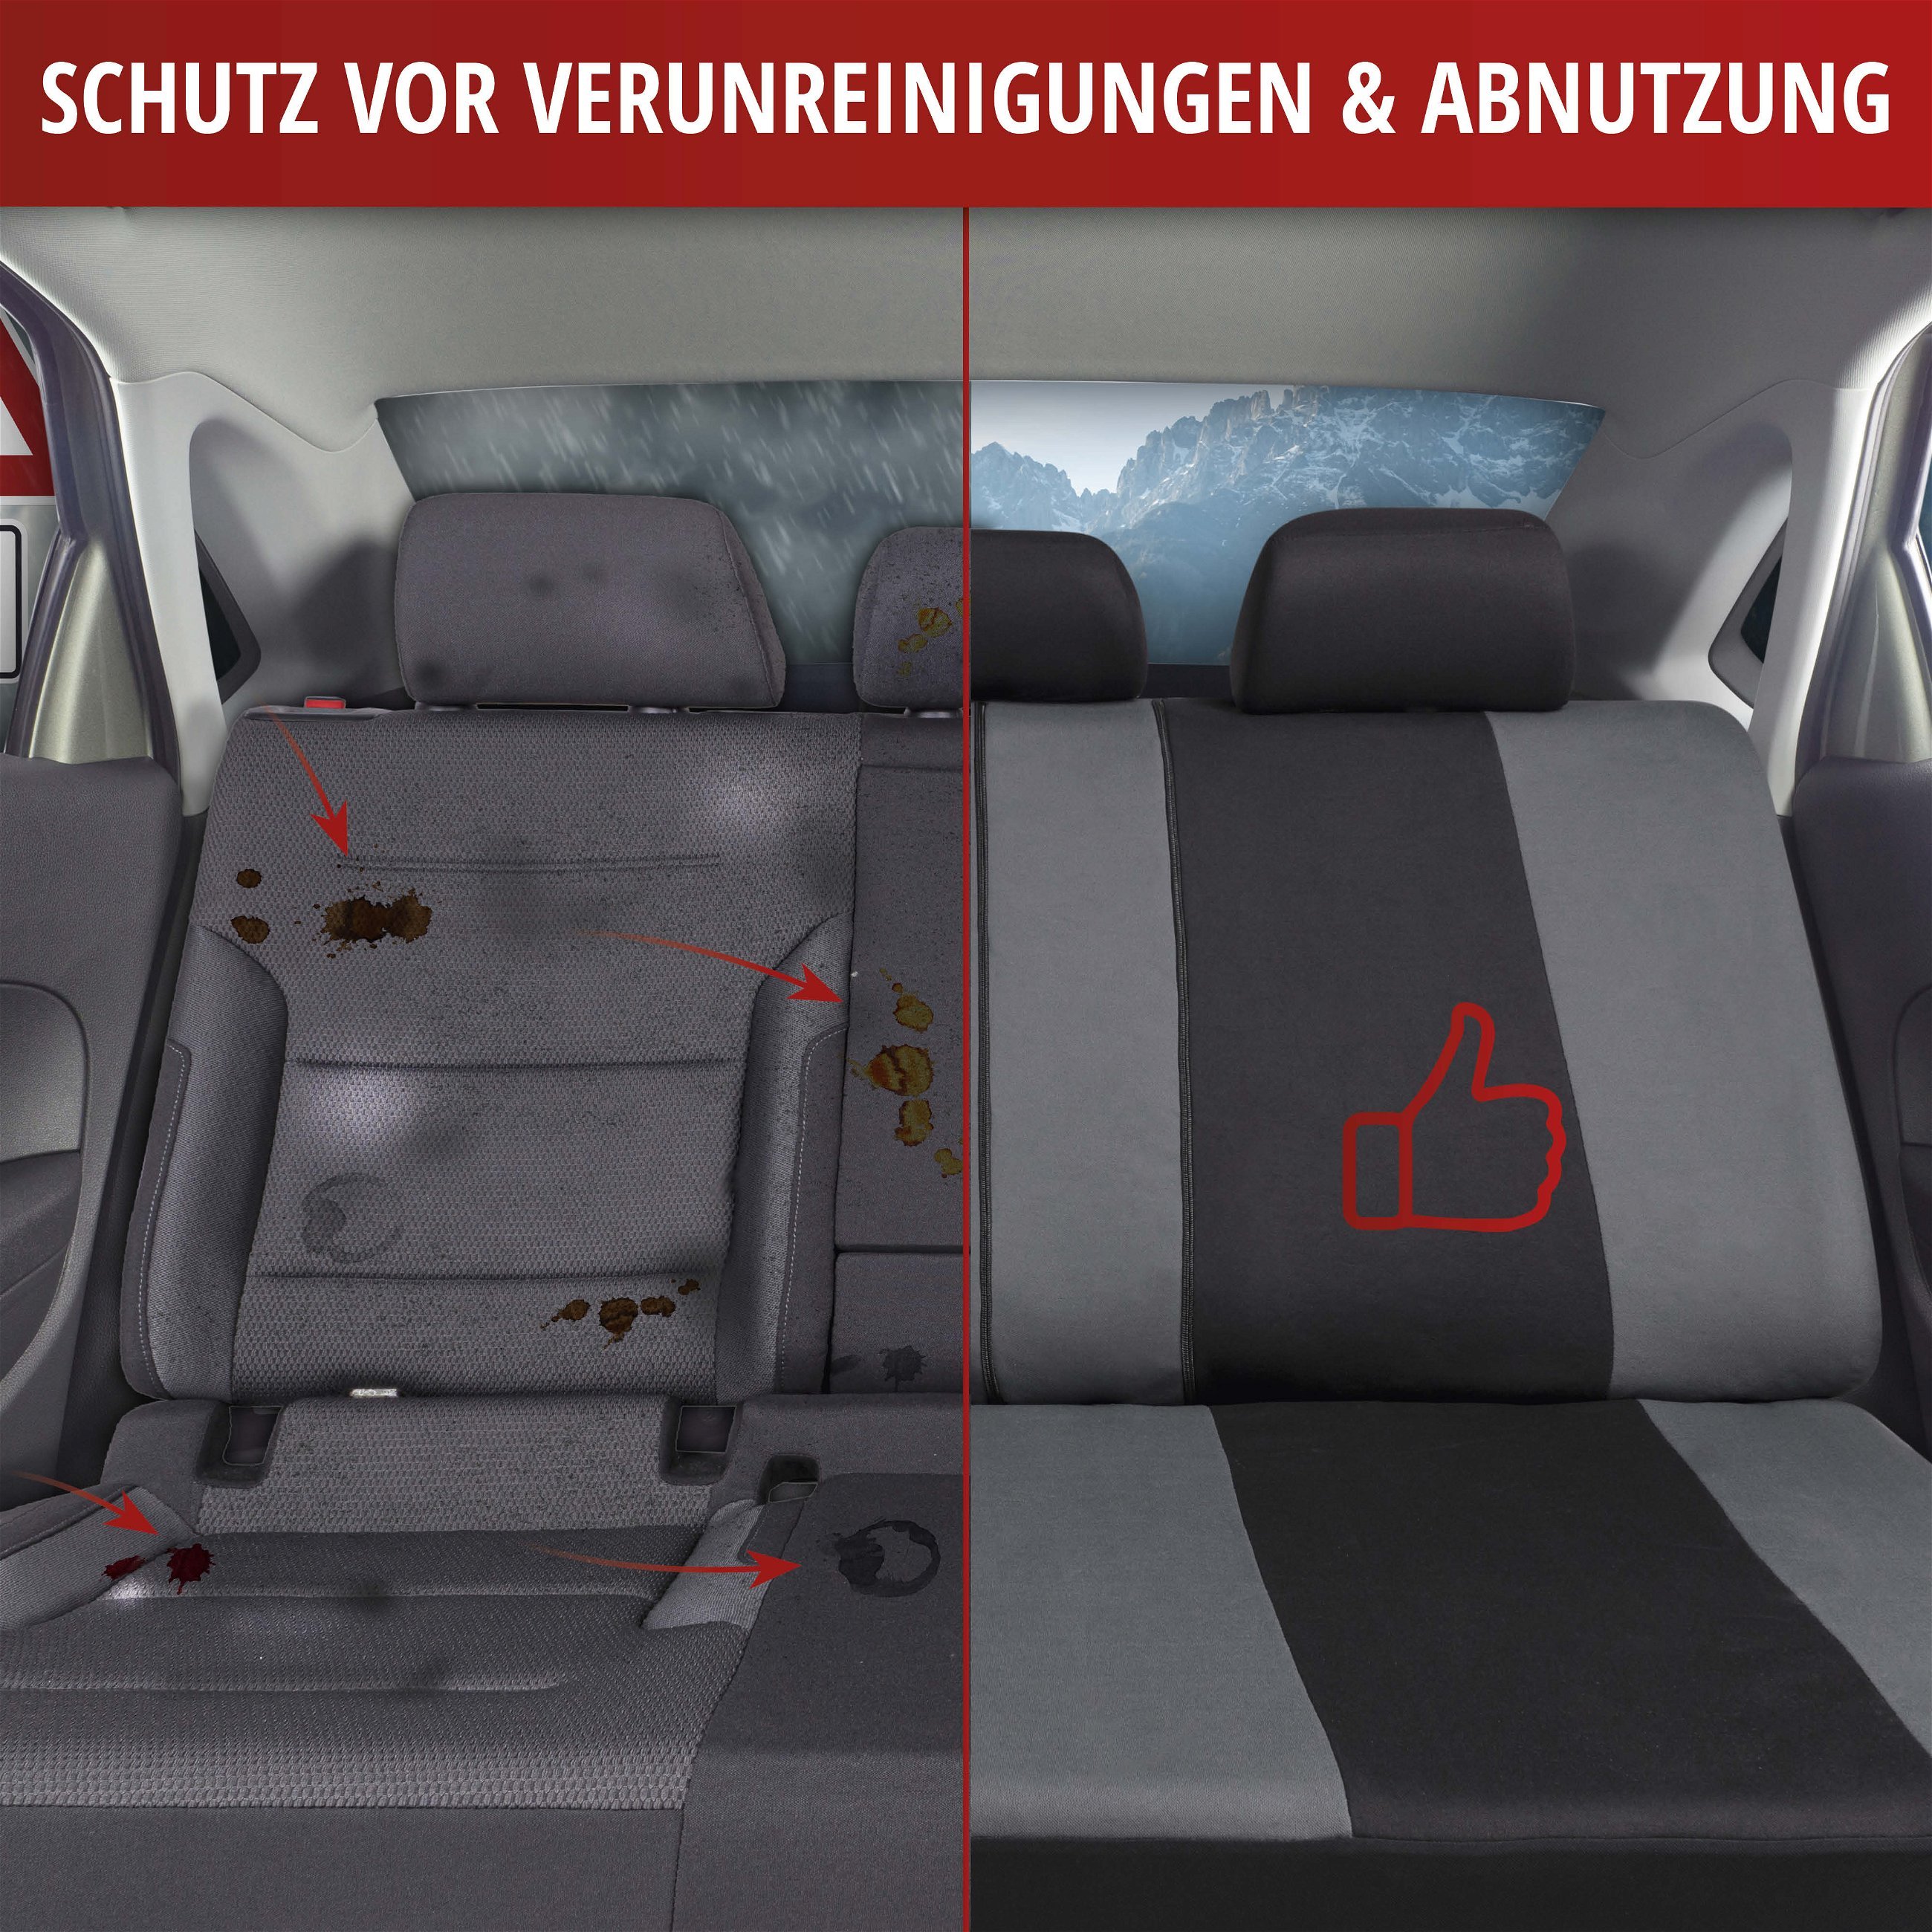 Universaler Sitzbezug ZIPP-IT Allessandro grau (Set) Airbag taug